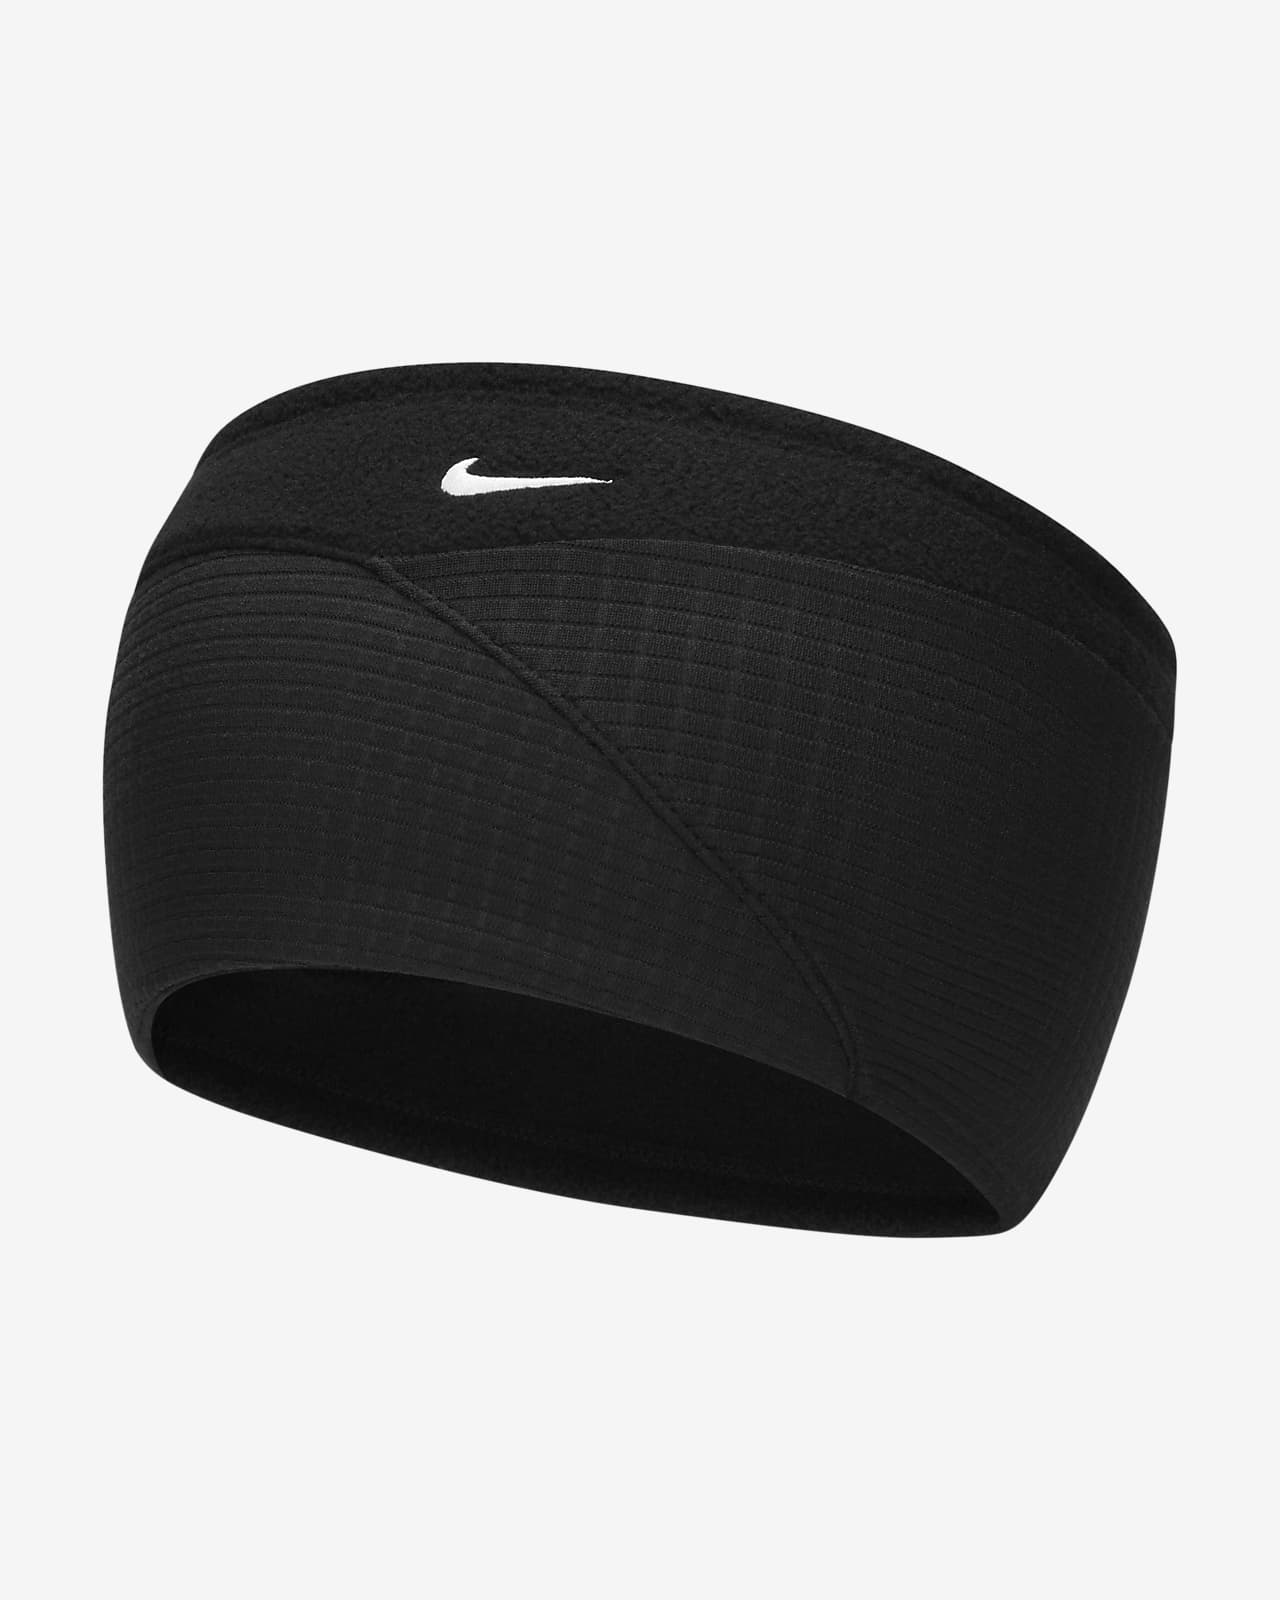 Nike Strike Elite Headband.